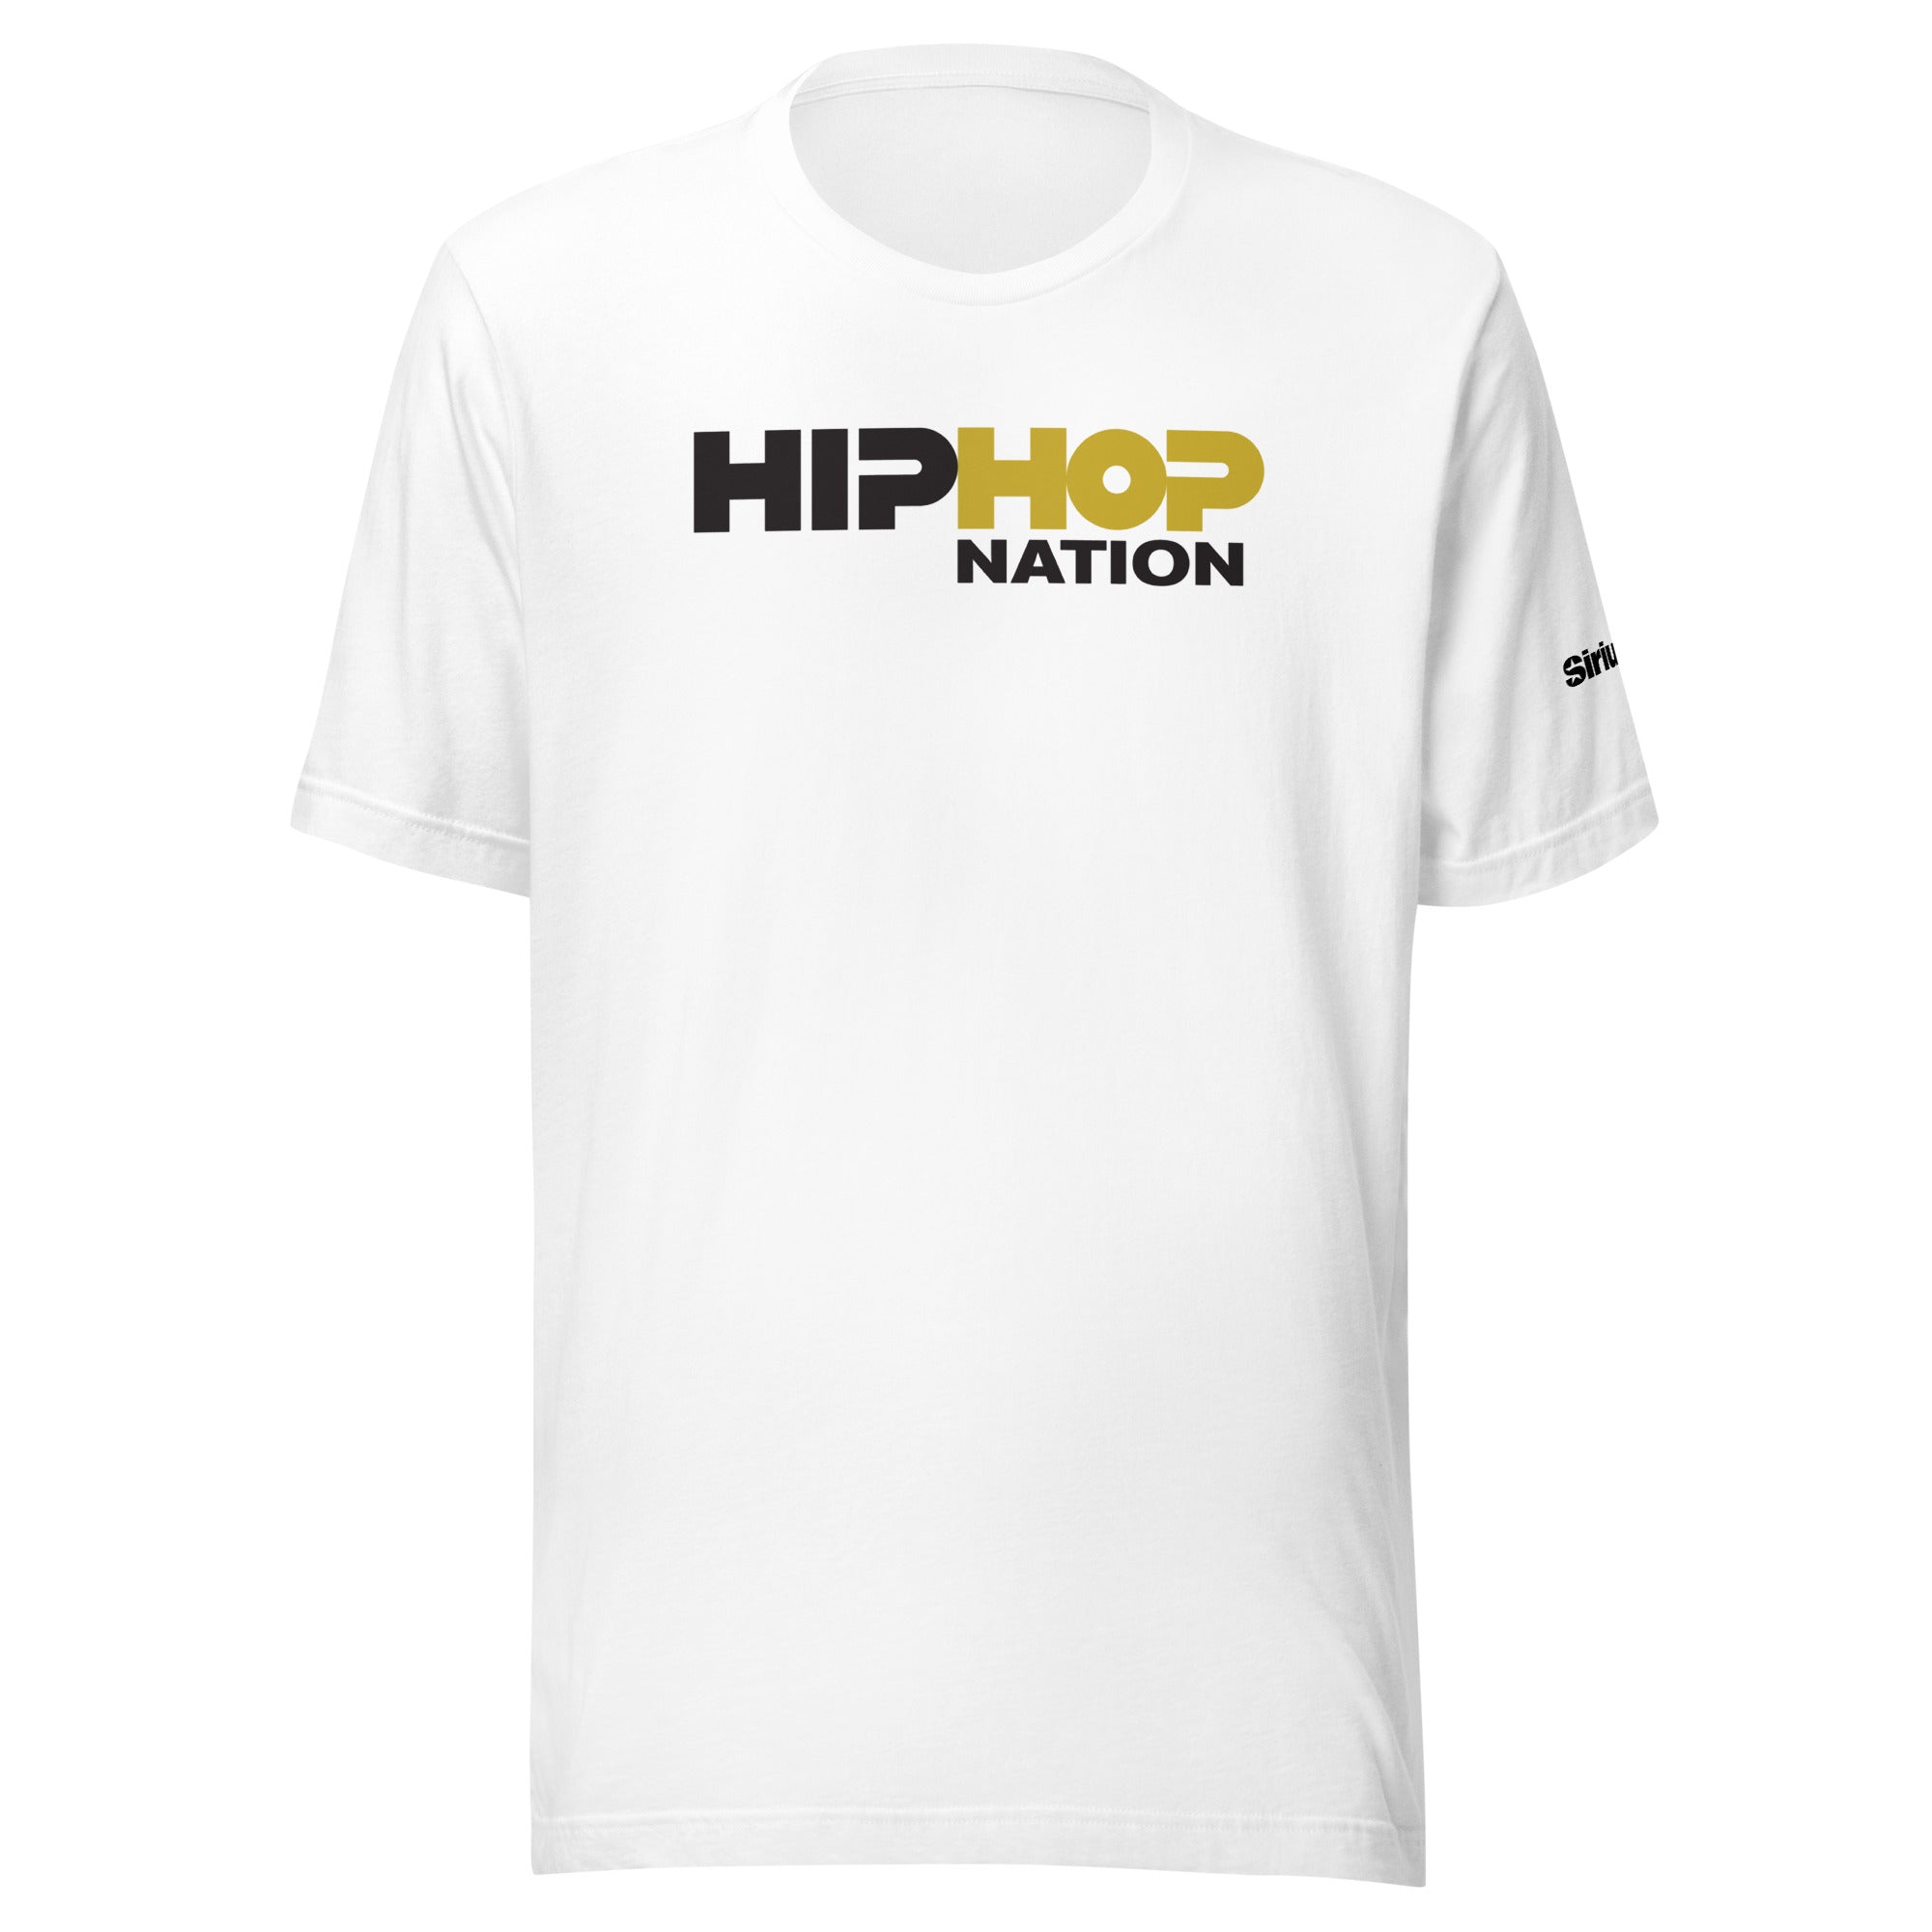 Hip-Hop Nation: T-shirt (White)